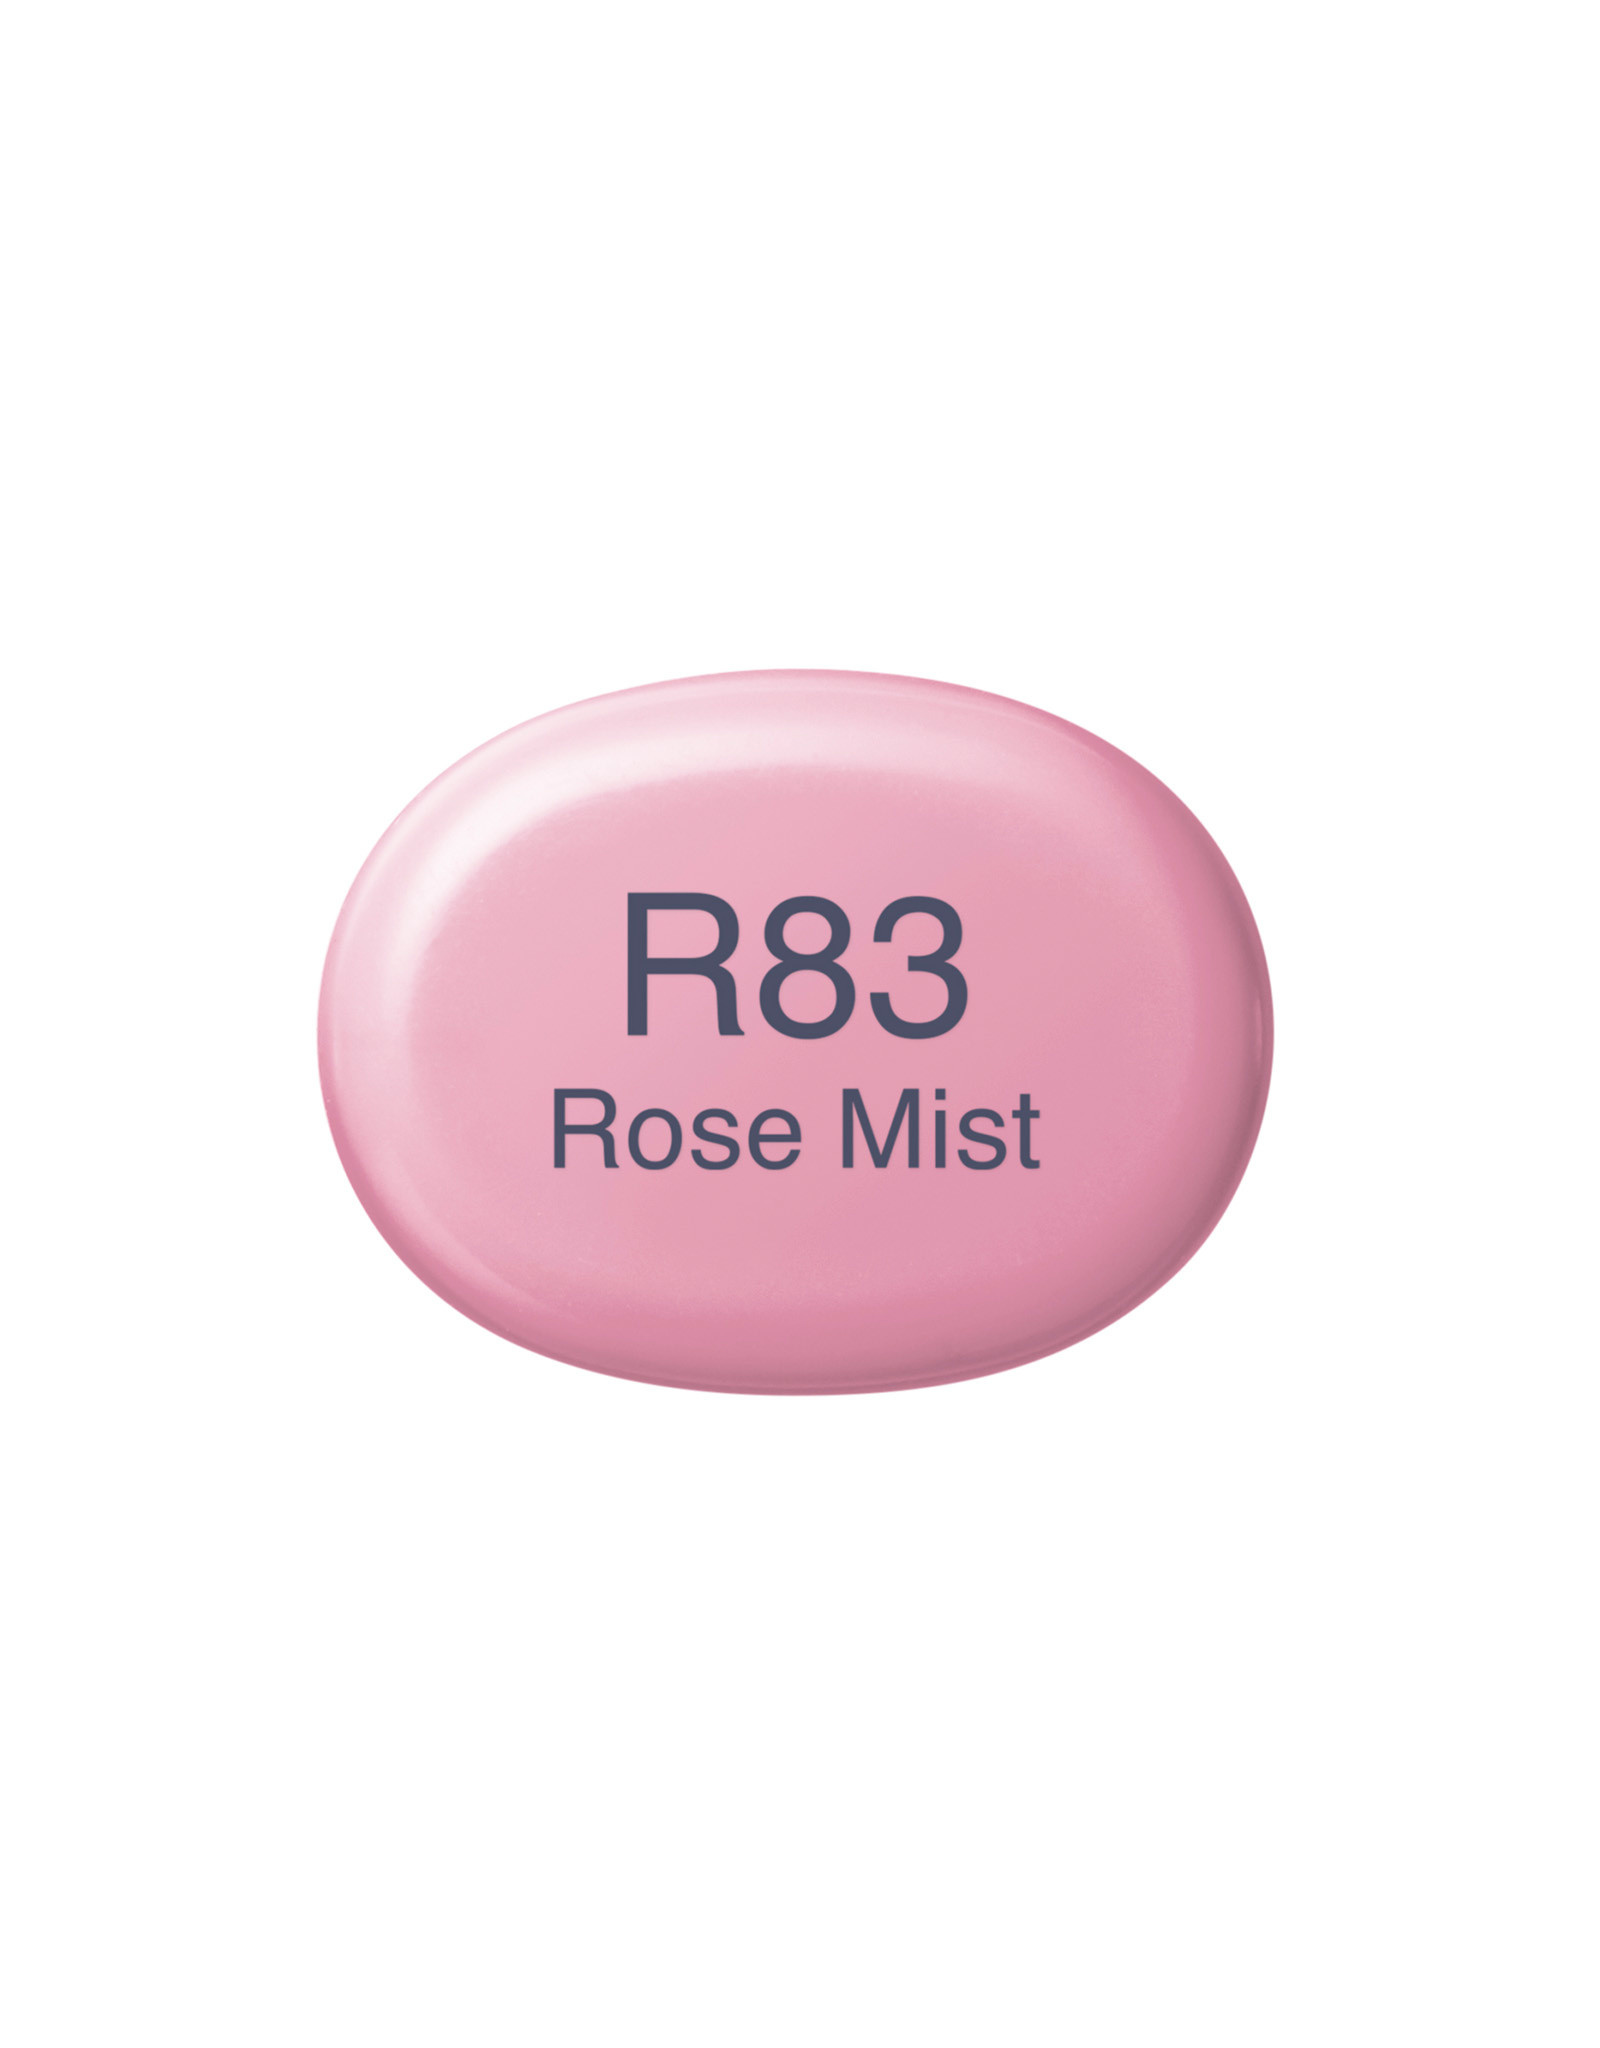 COPIC COPIC Sketch Marker R83 Rose Mist